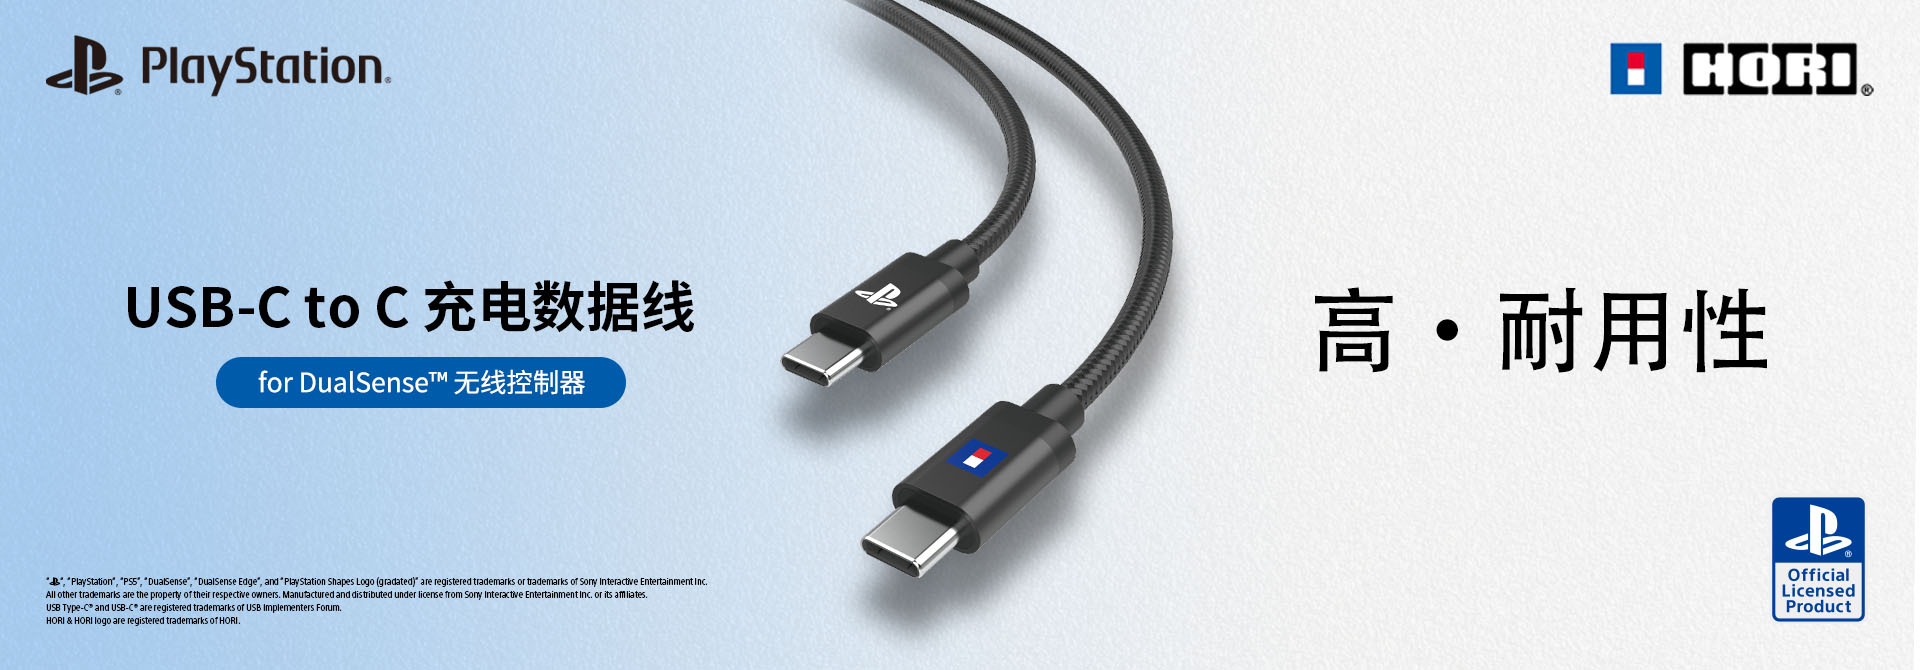 HORI USB-C to C 充电数据线 for DualSense™ 无线控制器